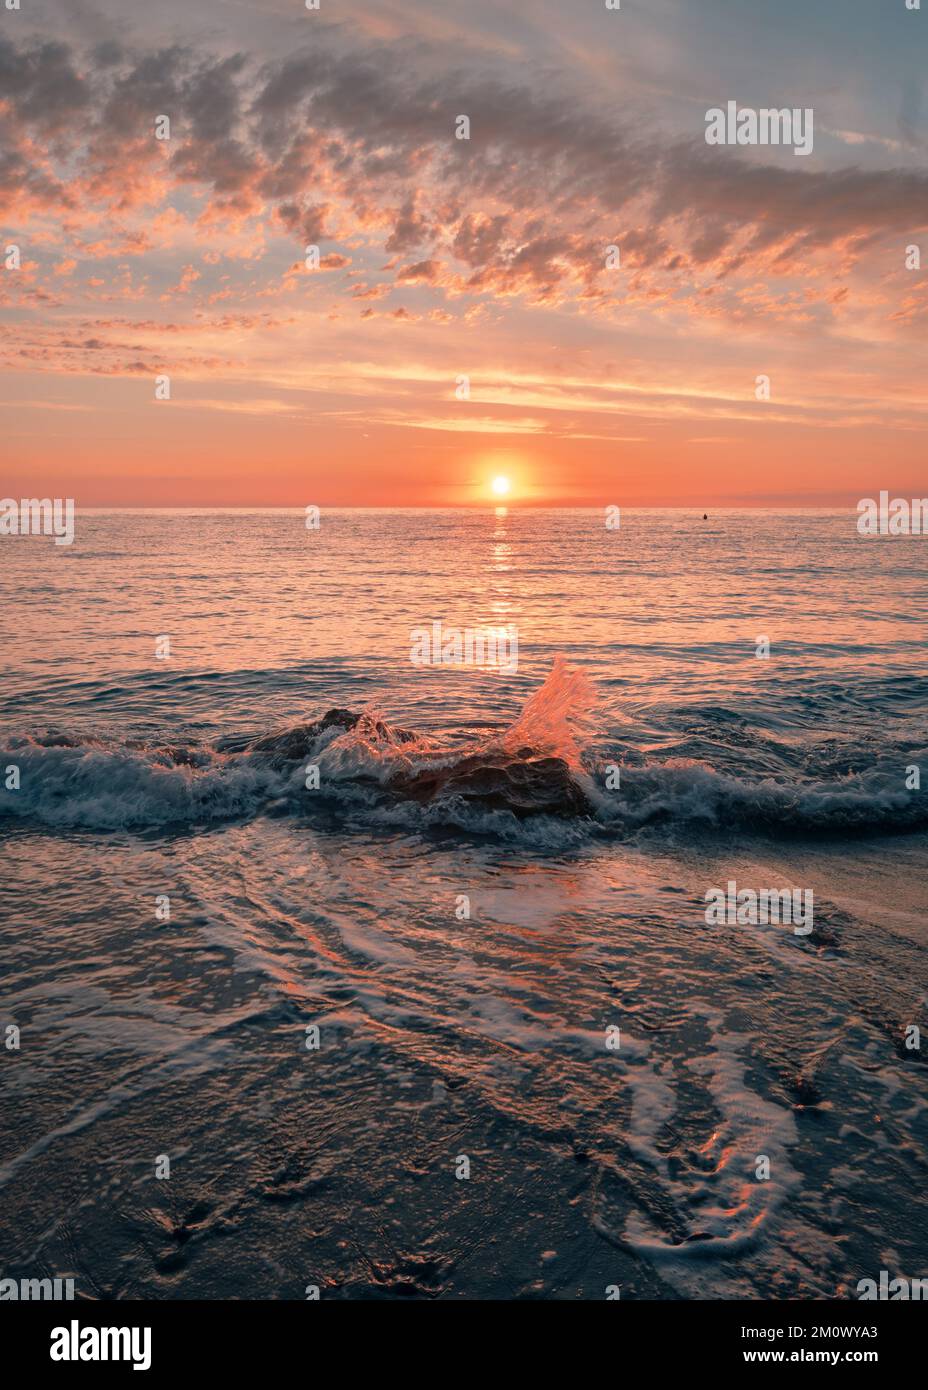 Sunrise on the seashore on the Italian Riviera. Splashing waves illuminated by sunlight. Vacation travel holiday banner, summer mood. The Ligurian Sea, Italy Stock Photo